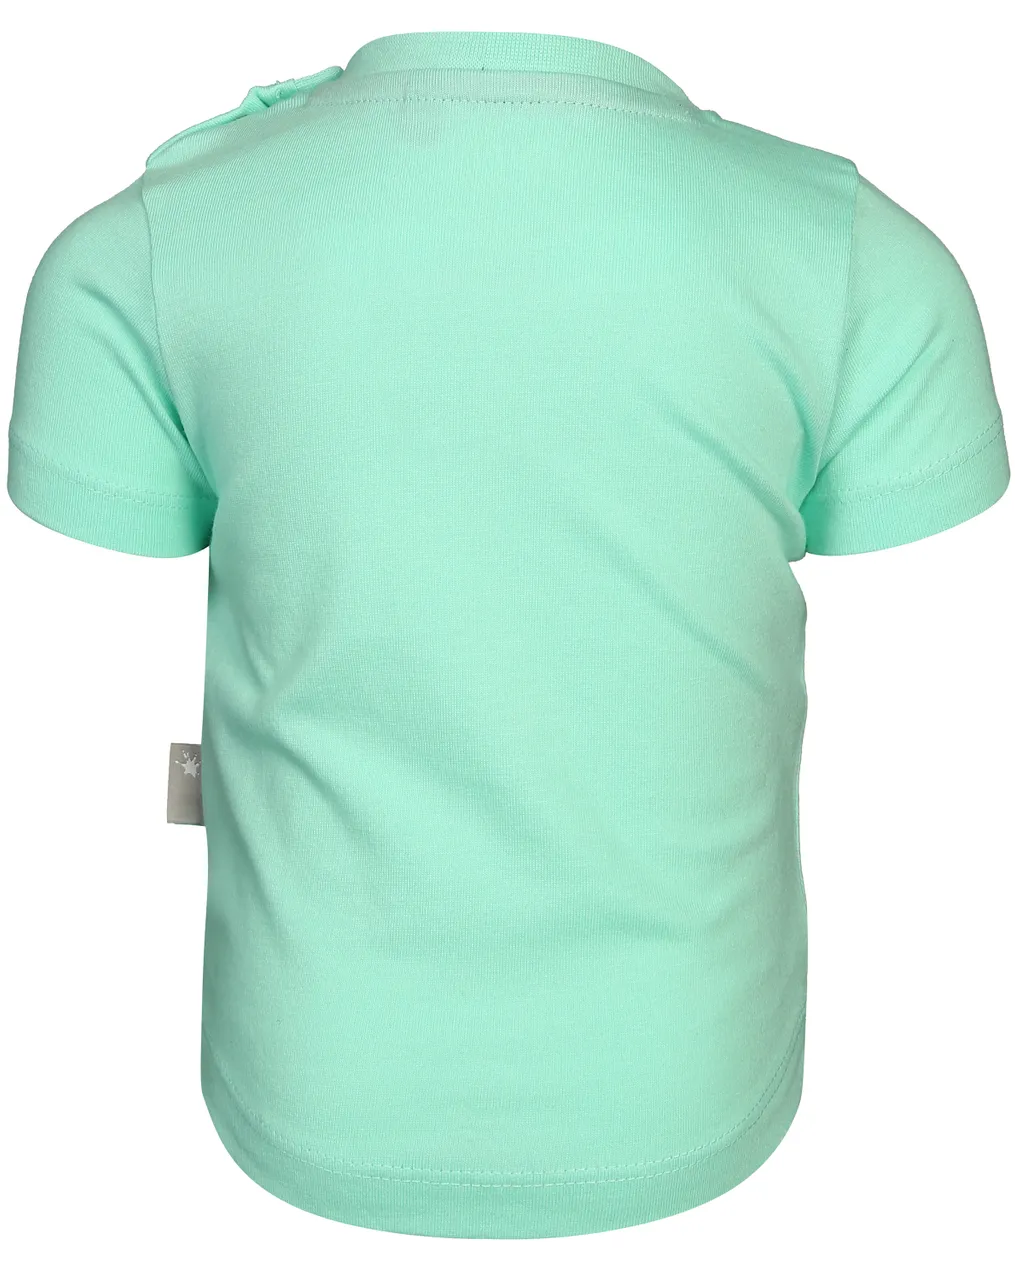 T-Shirt ZEBRA in türkis